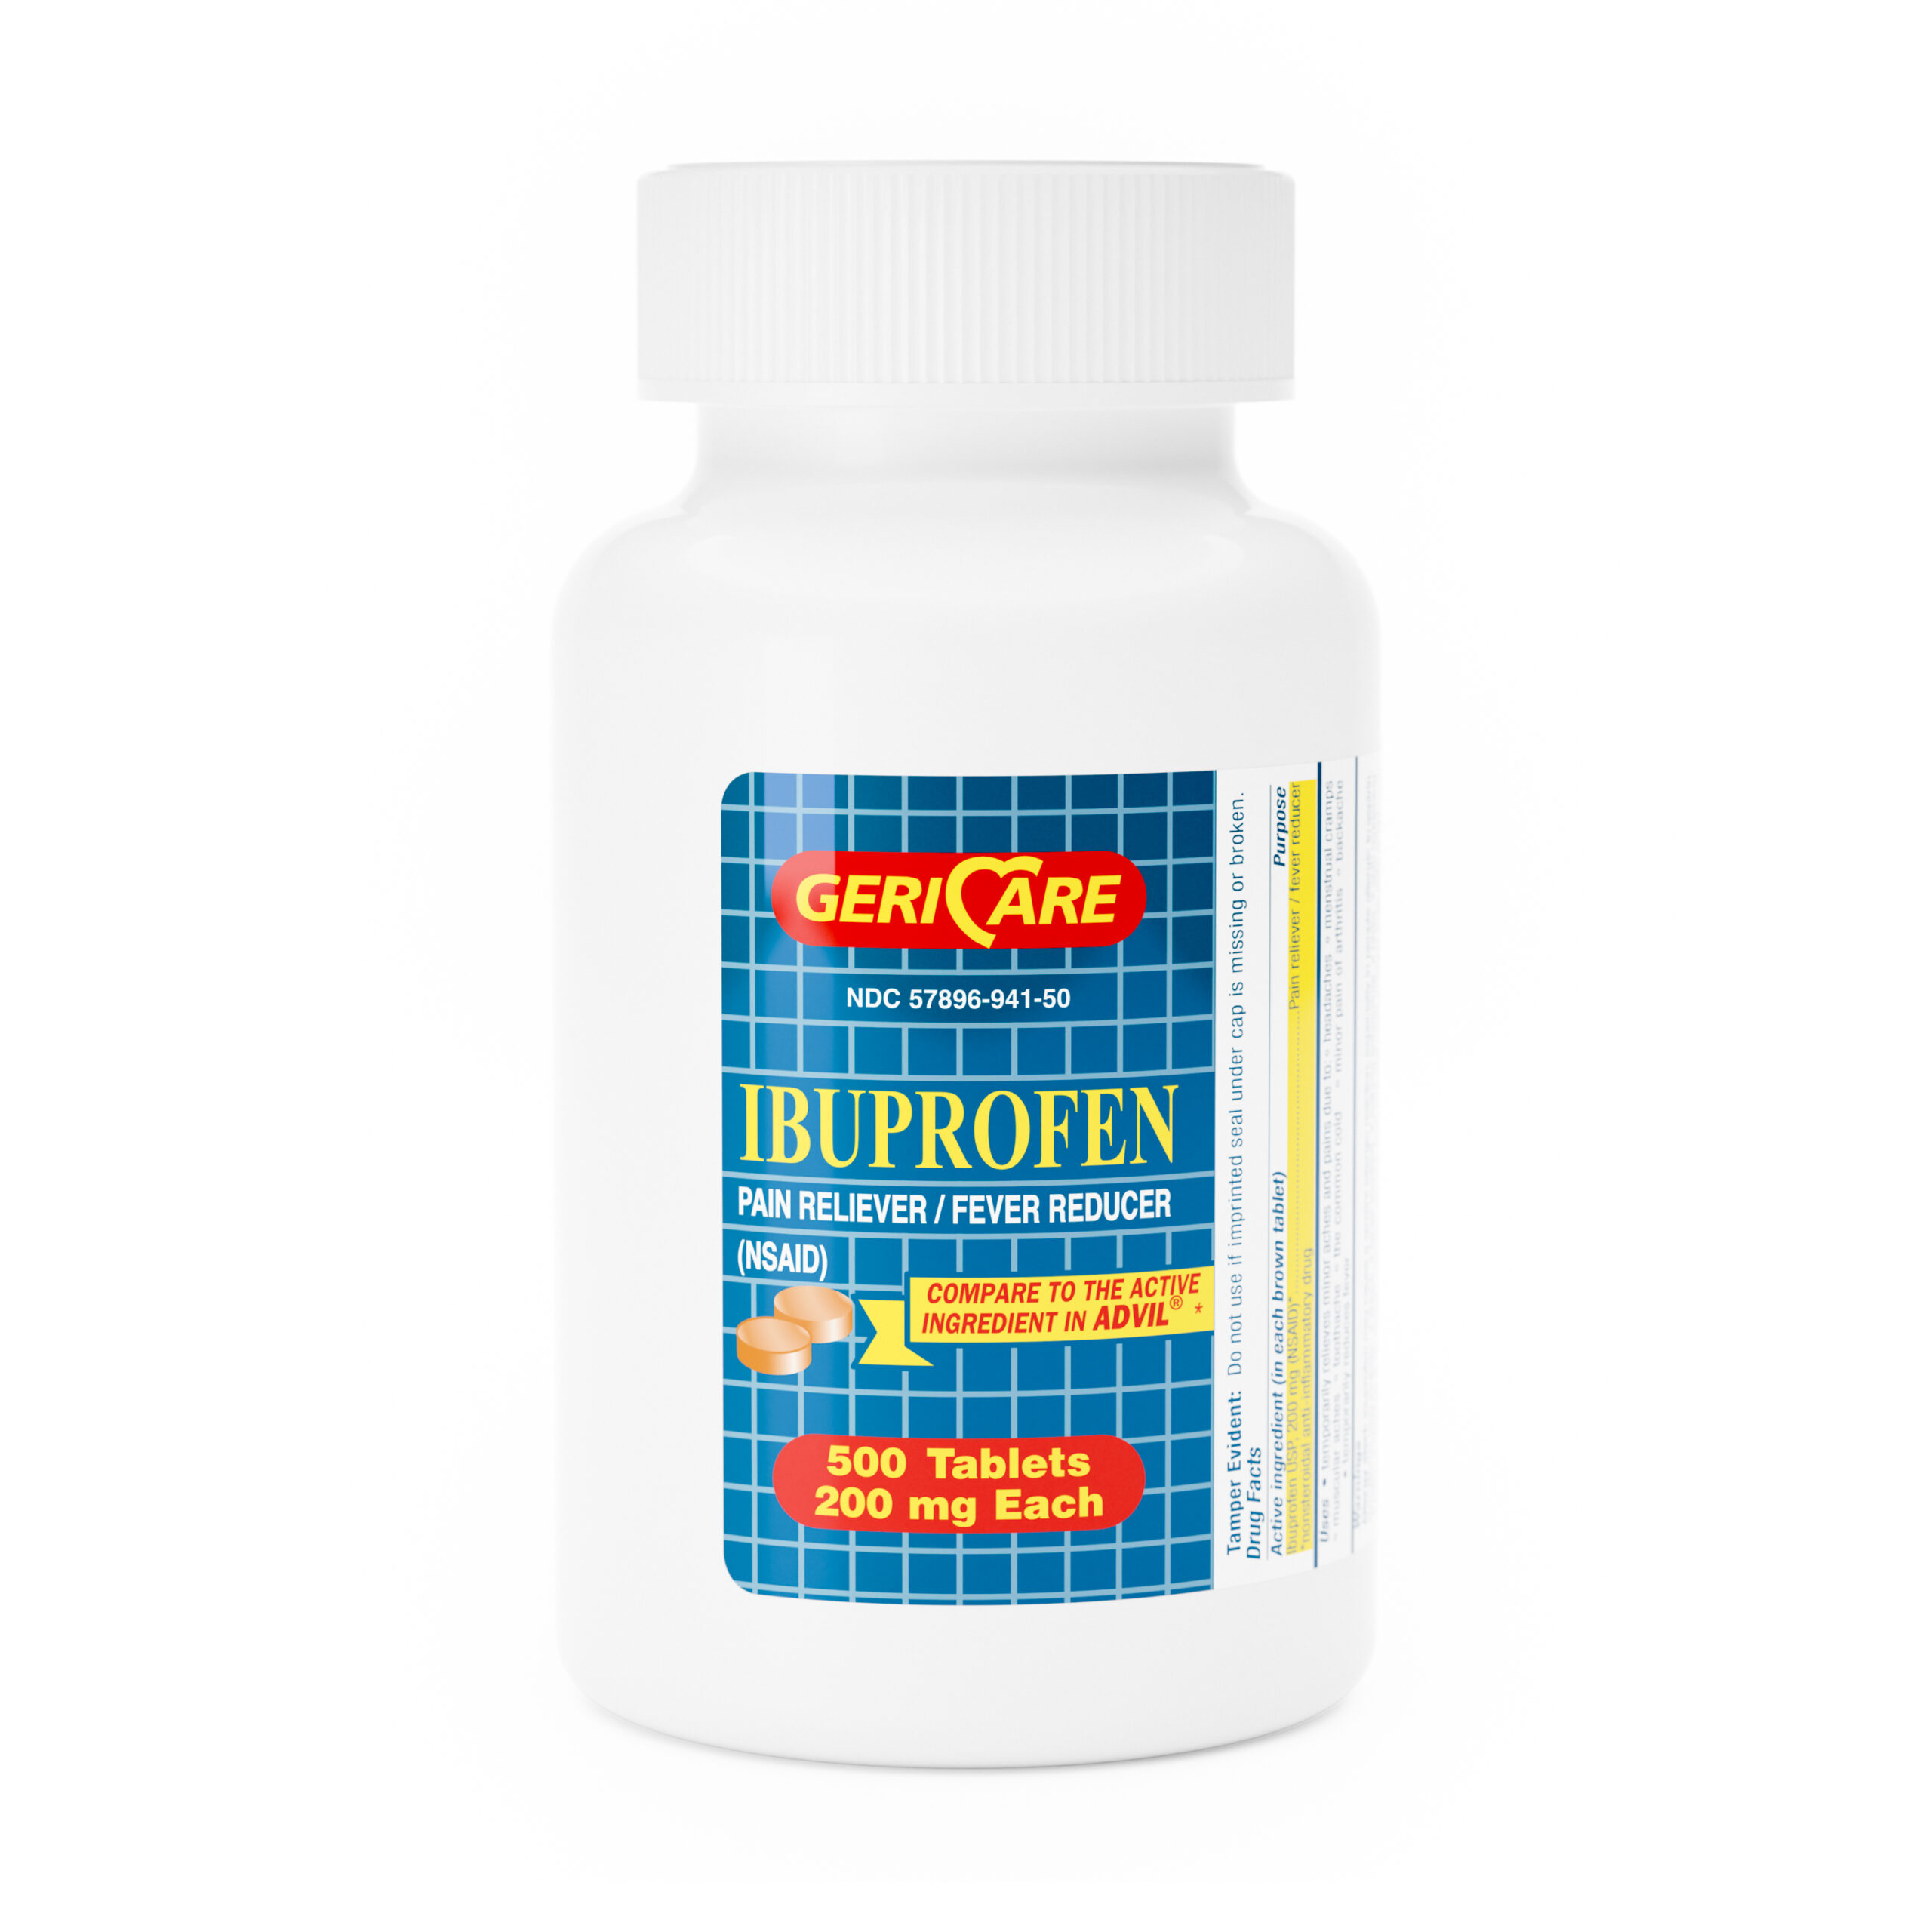 Ibuprofen 200mg – 500 Tablets